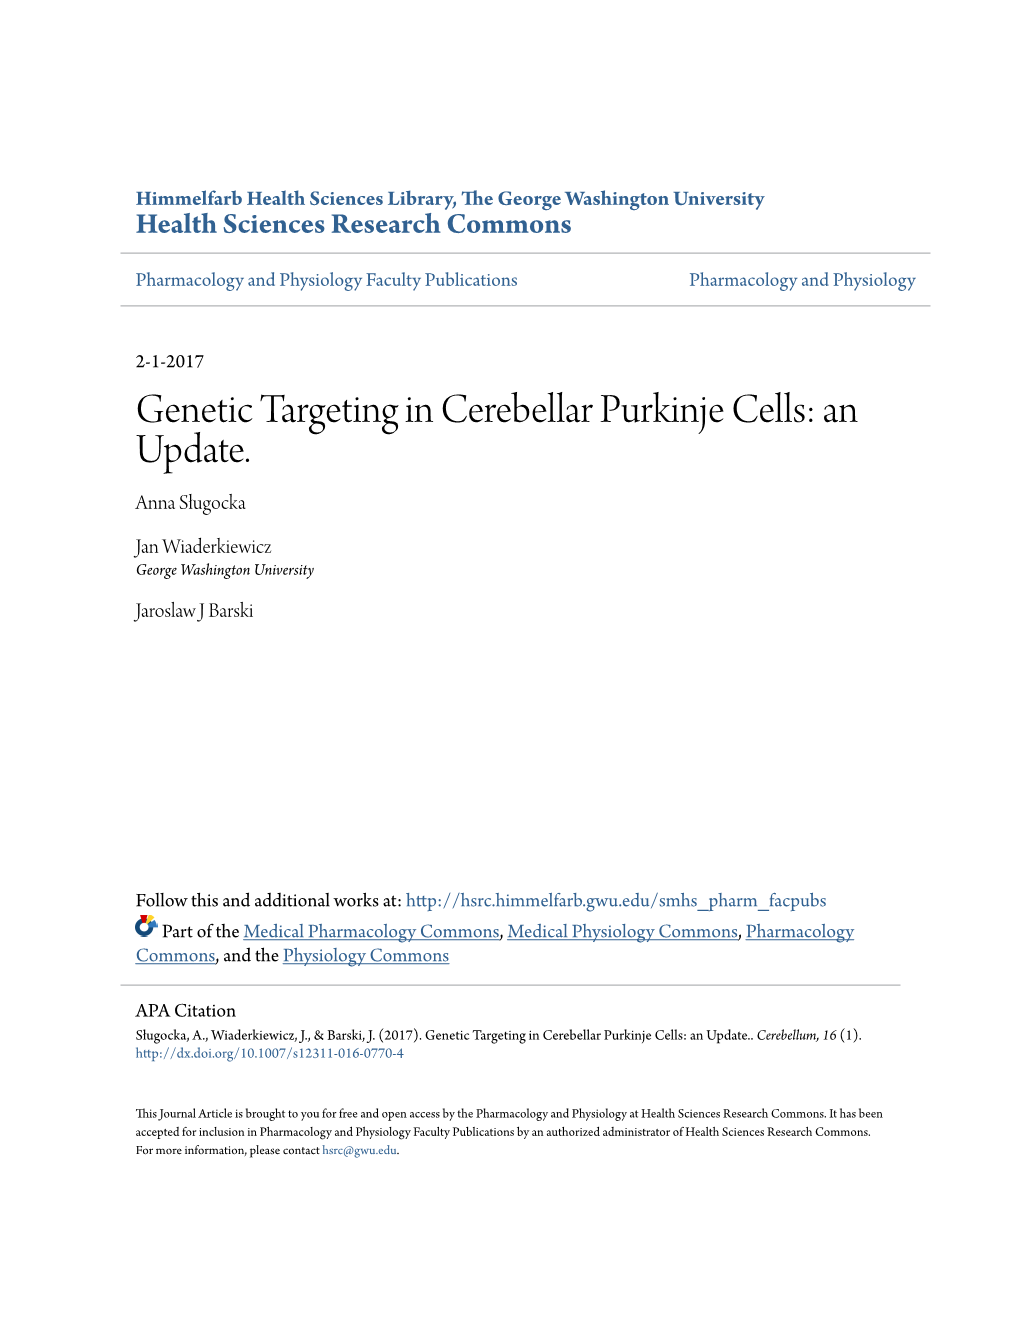 Genetic Targeting in Cerebellar Purkinje Cells: an Update